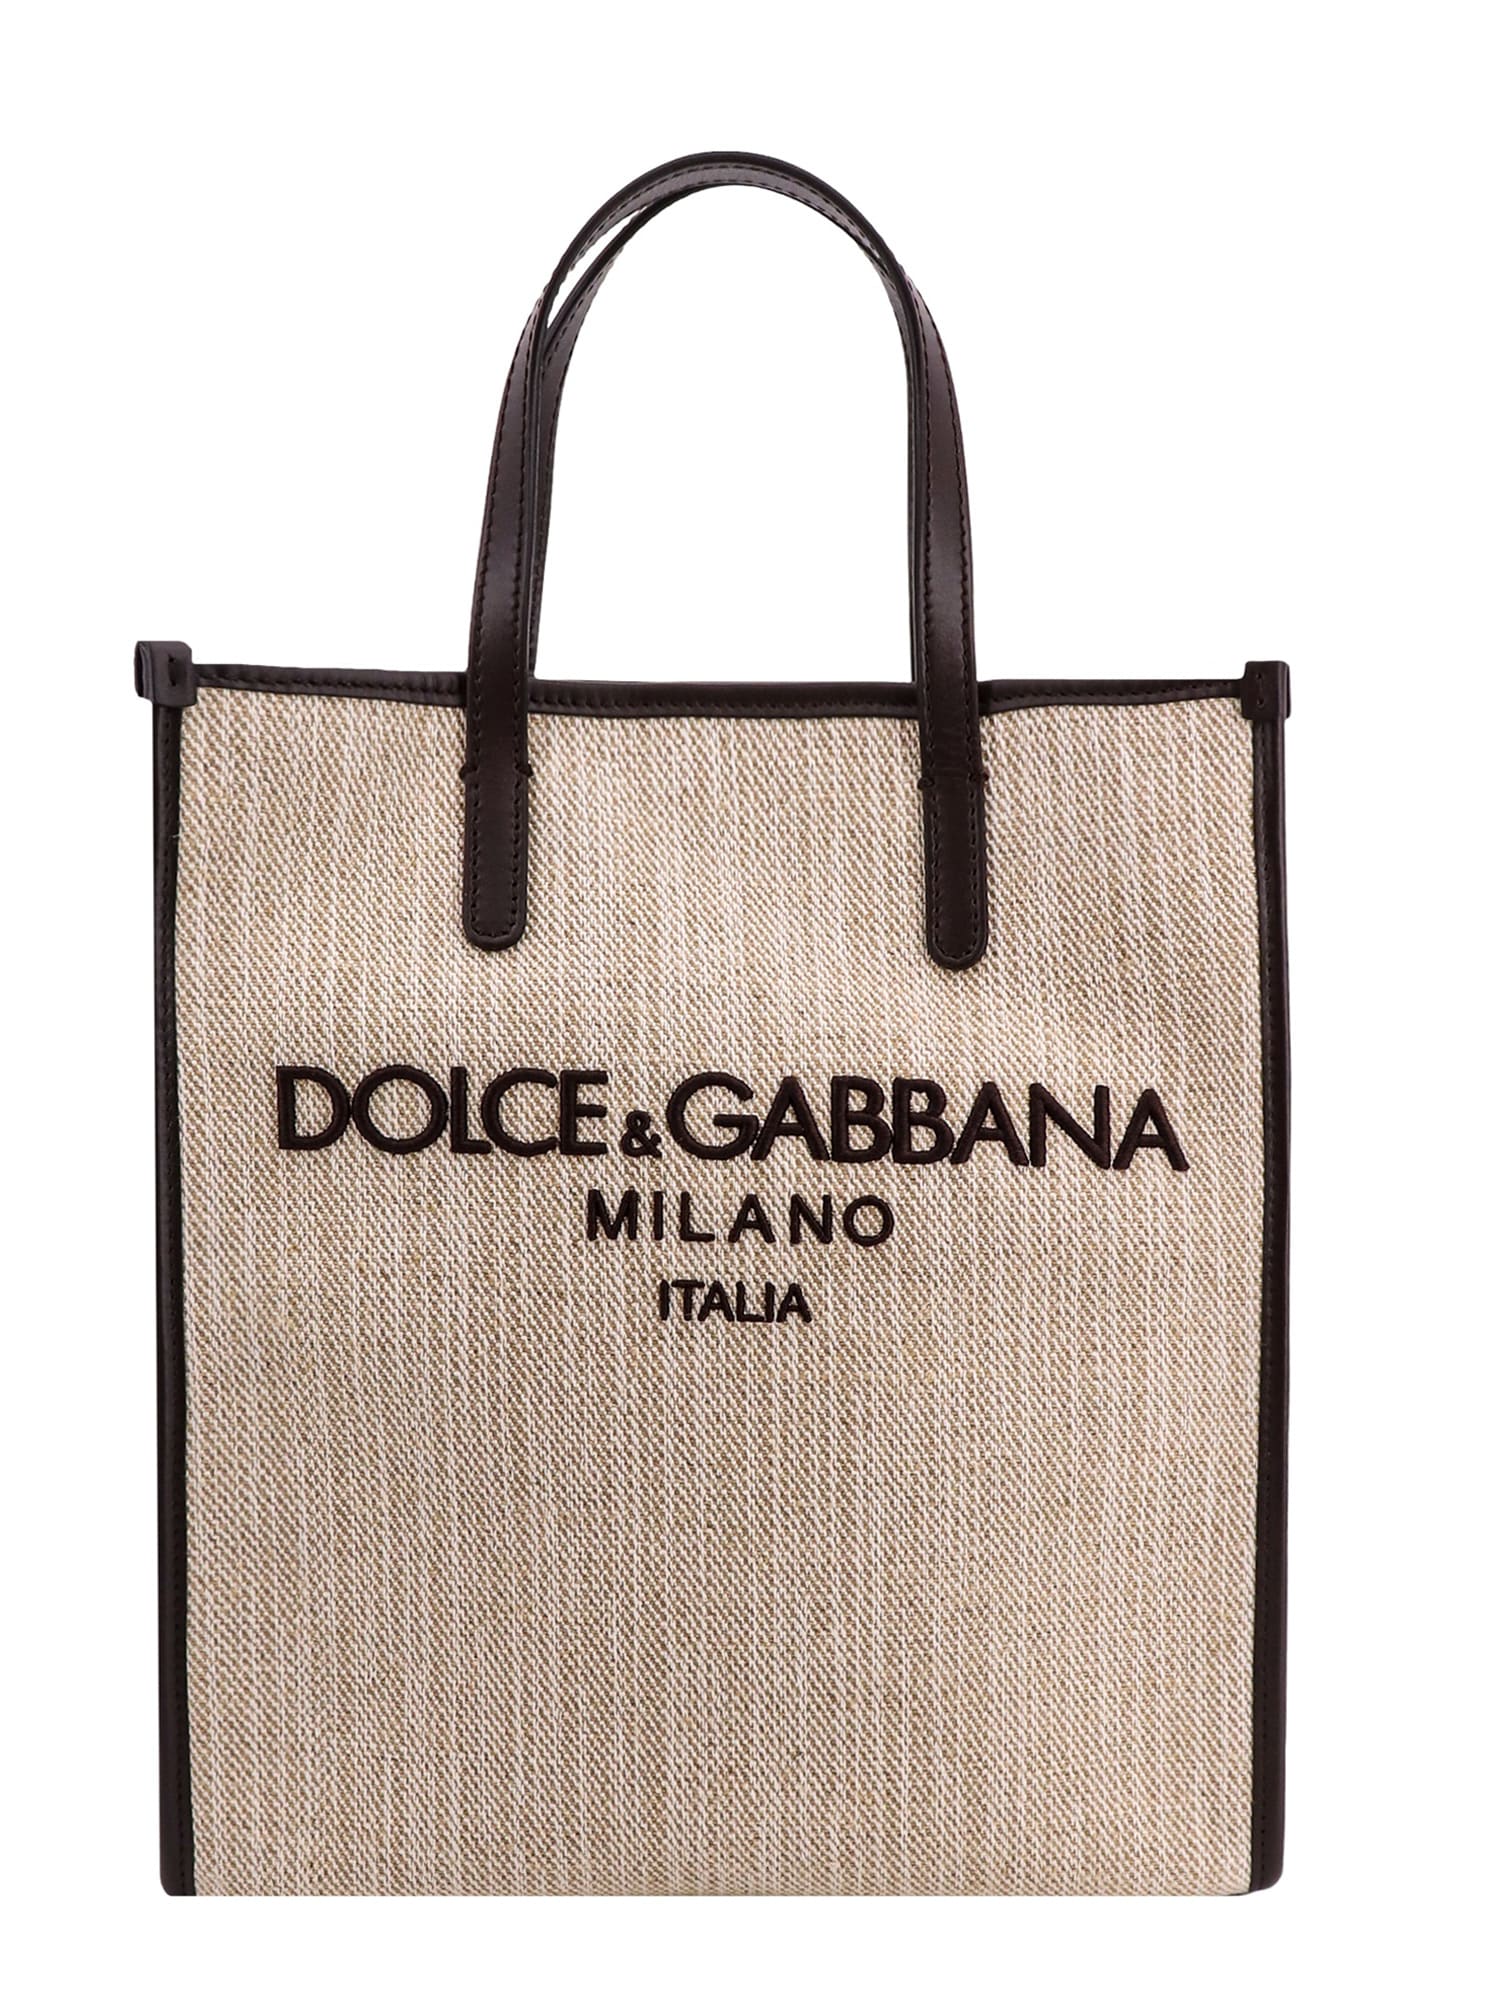 beige and white leather DG logo-print tote bag - DOLCE & GABBANA - Nida